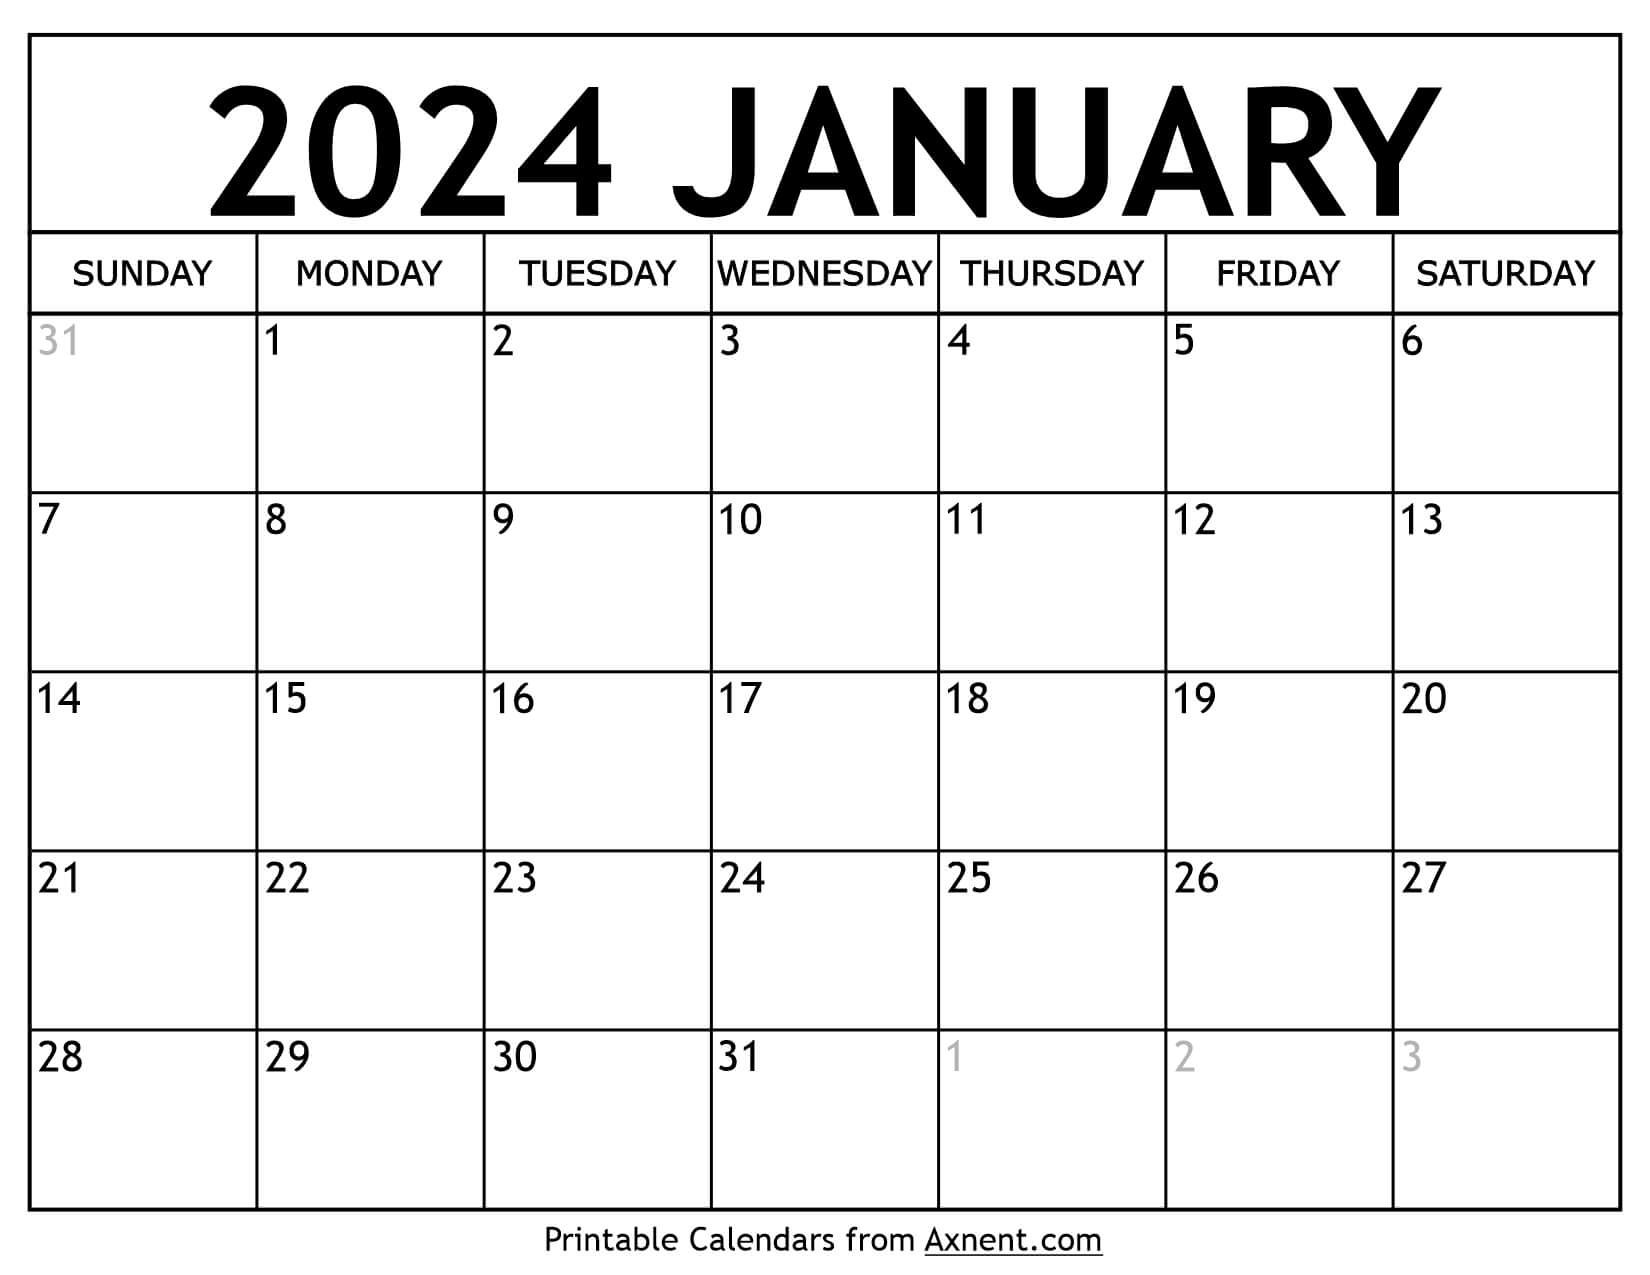 Printable January 2024 Calendar Template - Print Now for Calendar January 2024 Printable